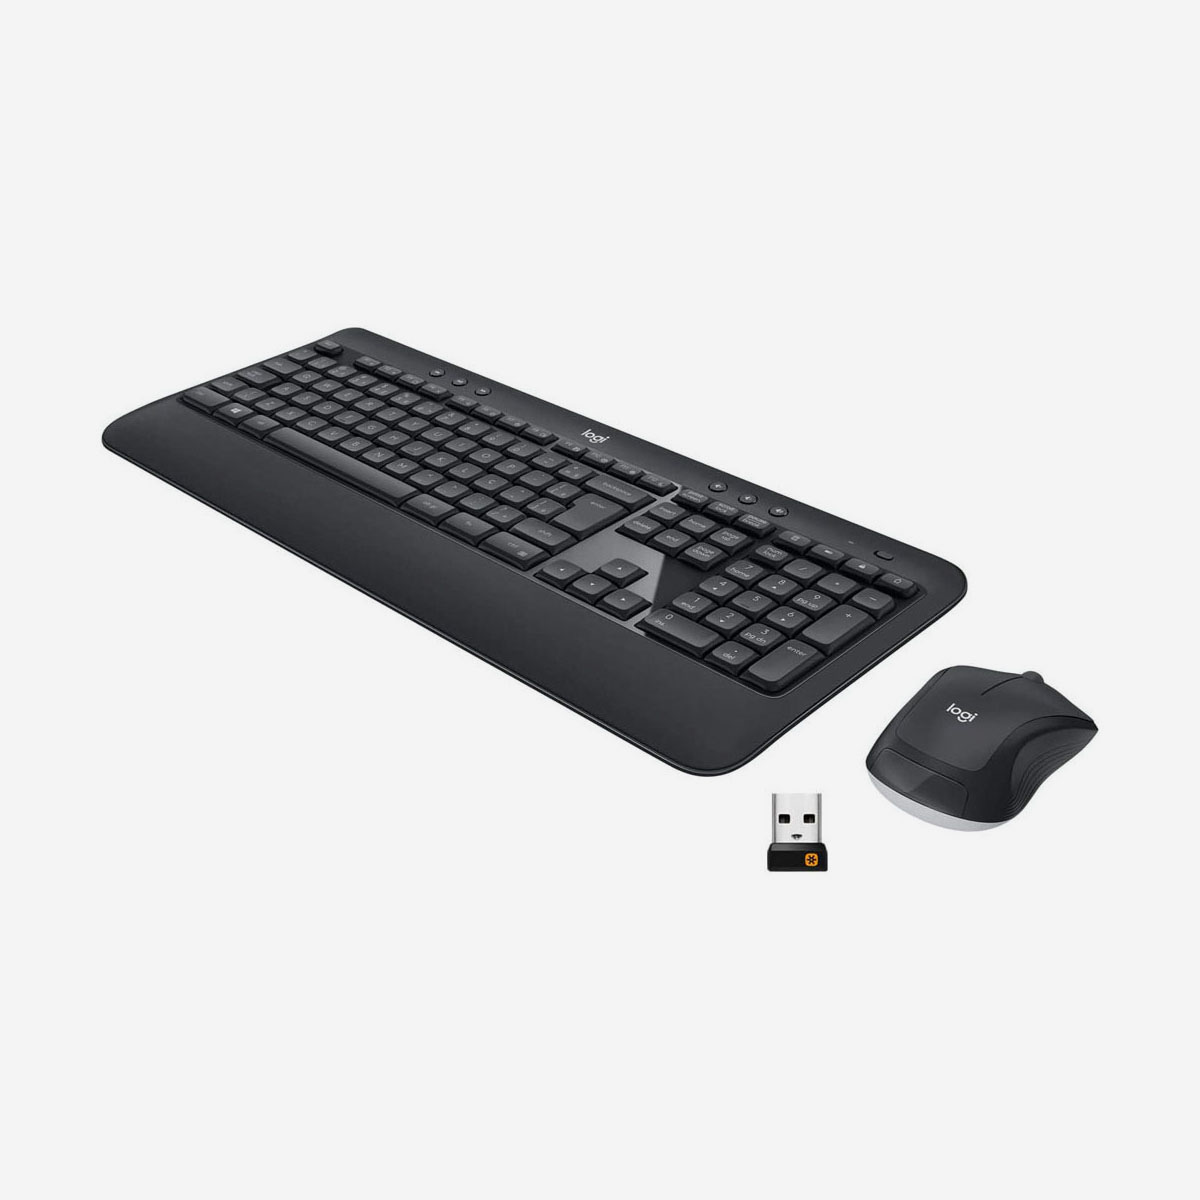 shoip43 keyboard mouse